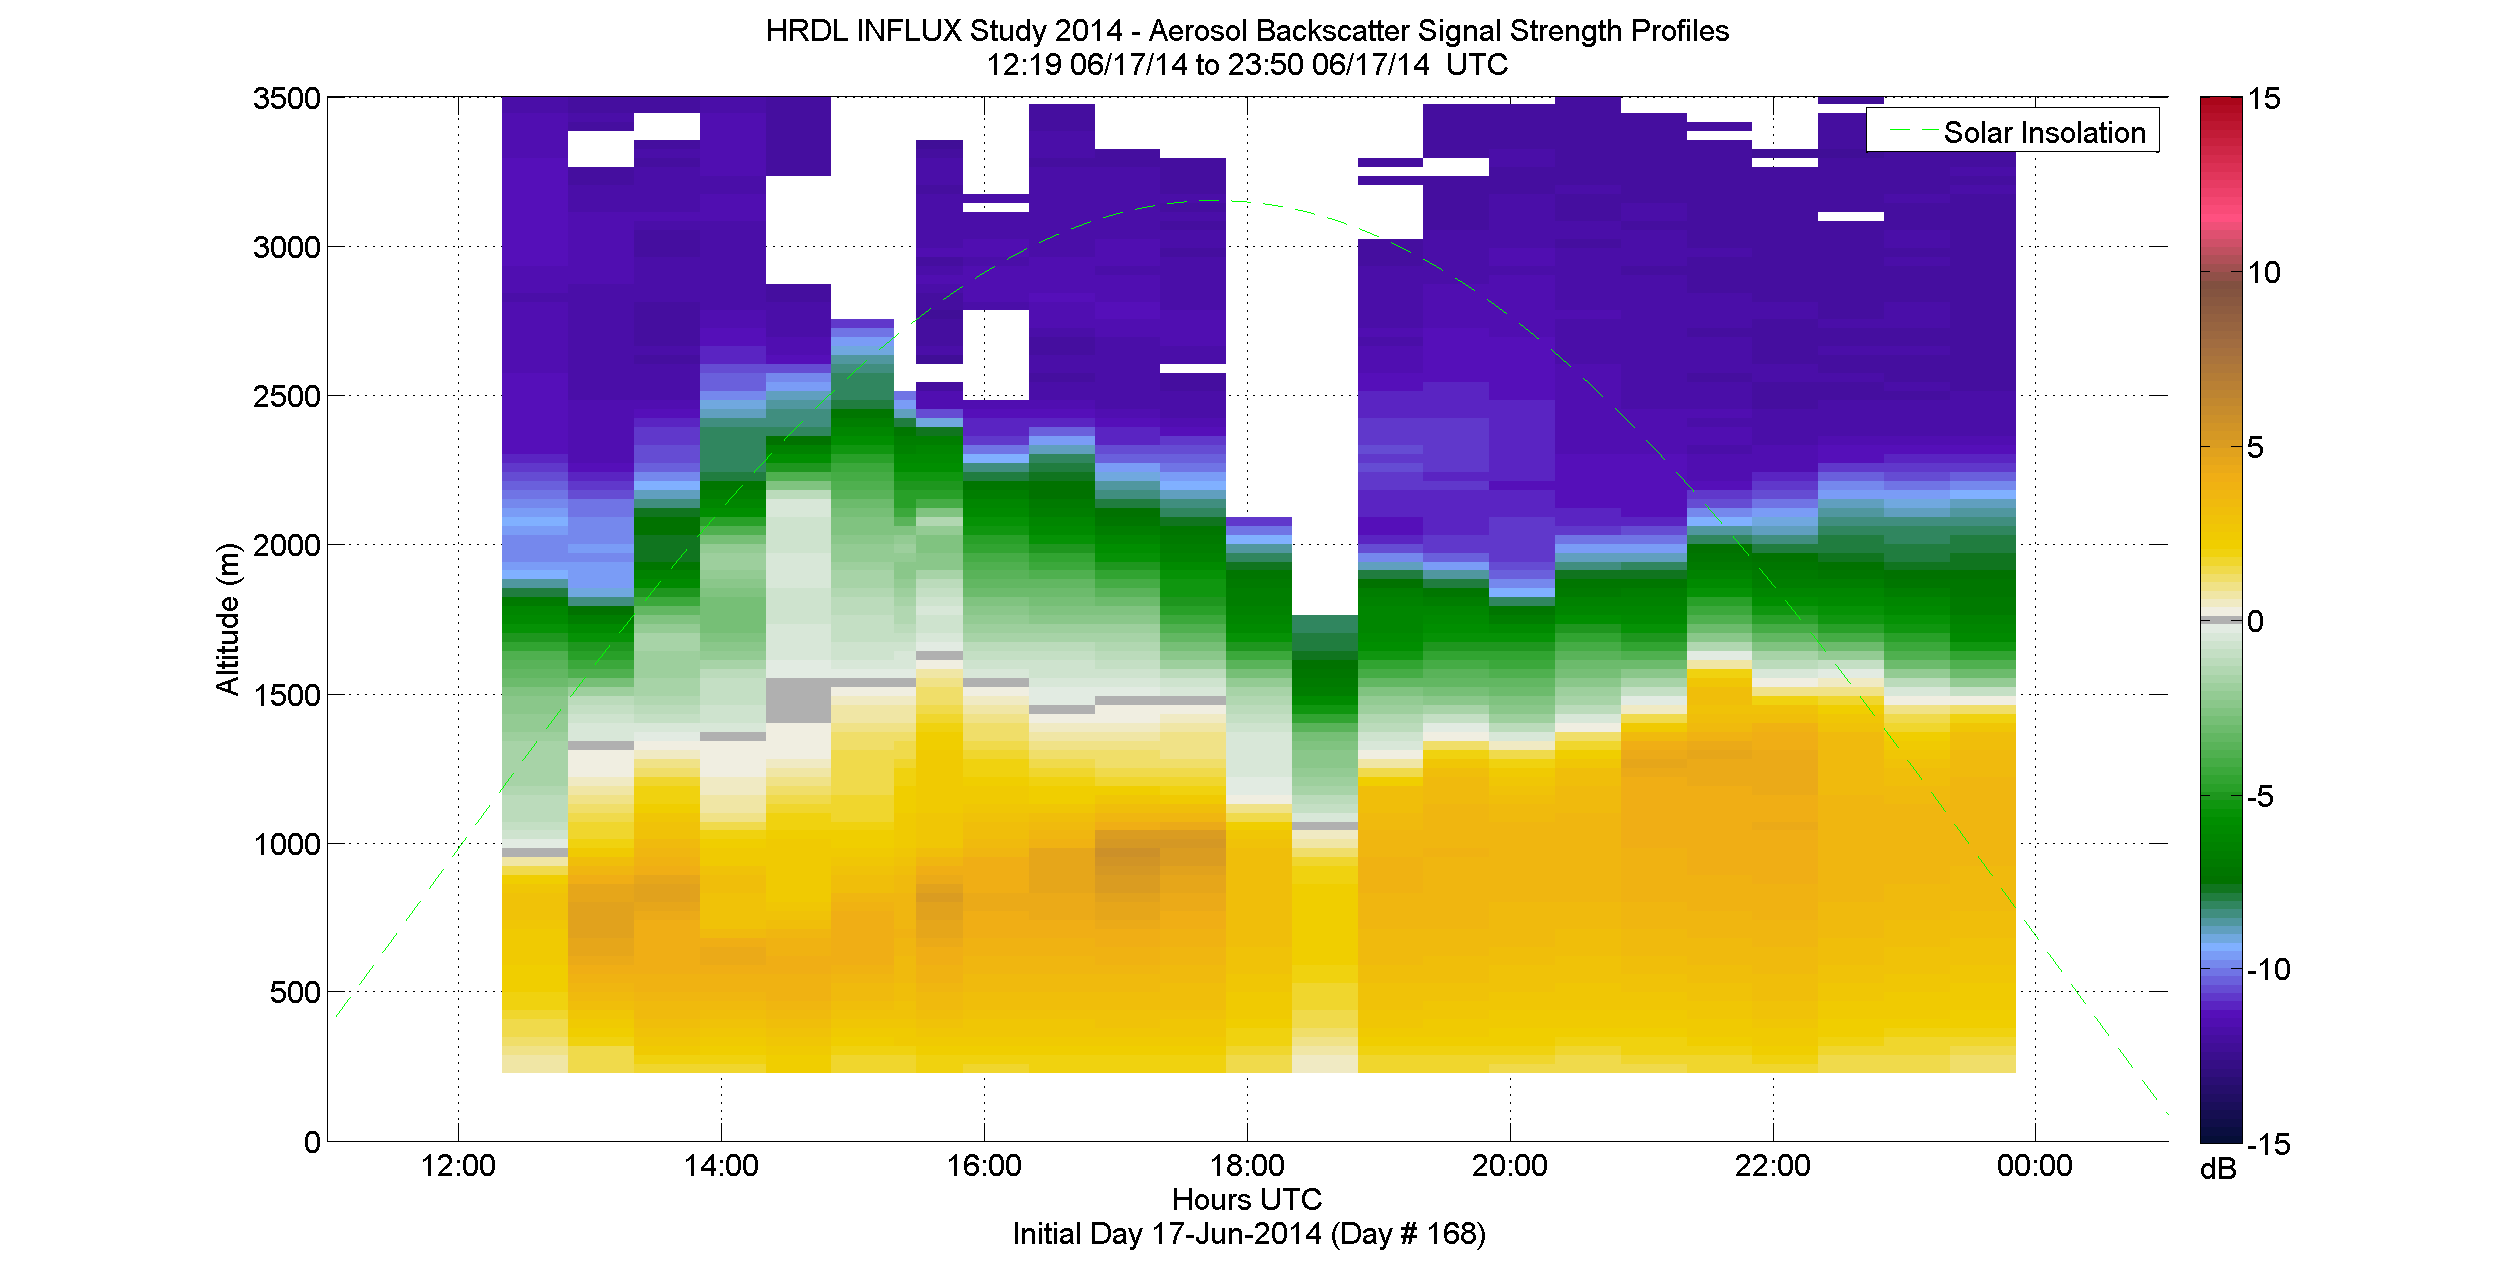 HRDL aerosol backscatter signal strength profile - June 17 pm